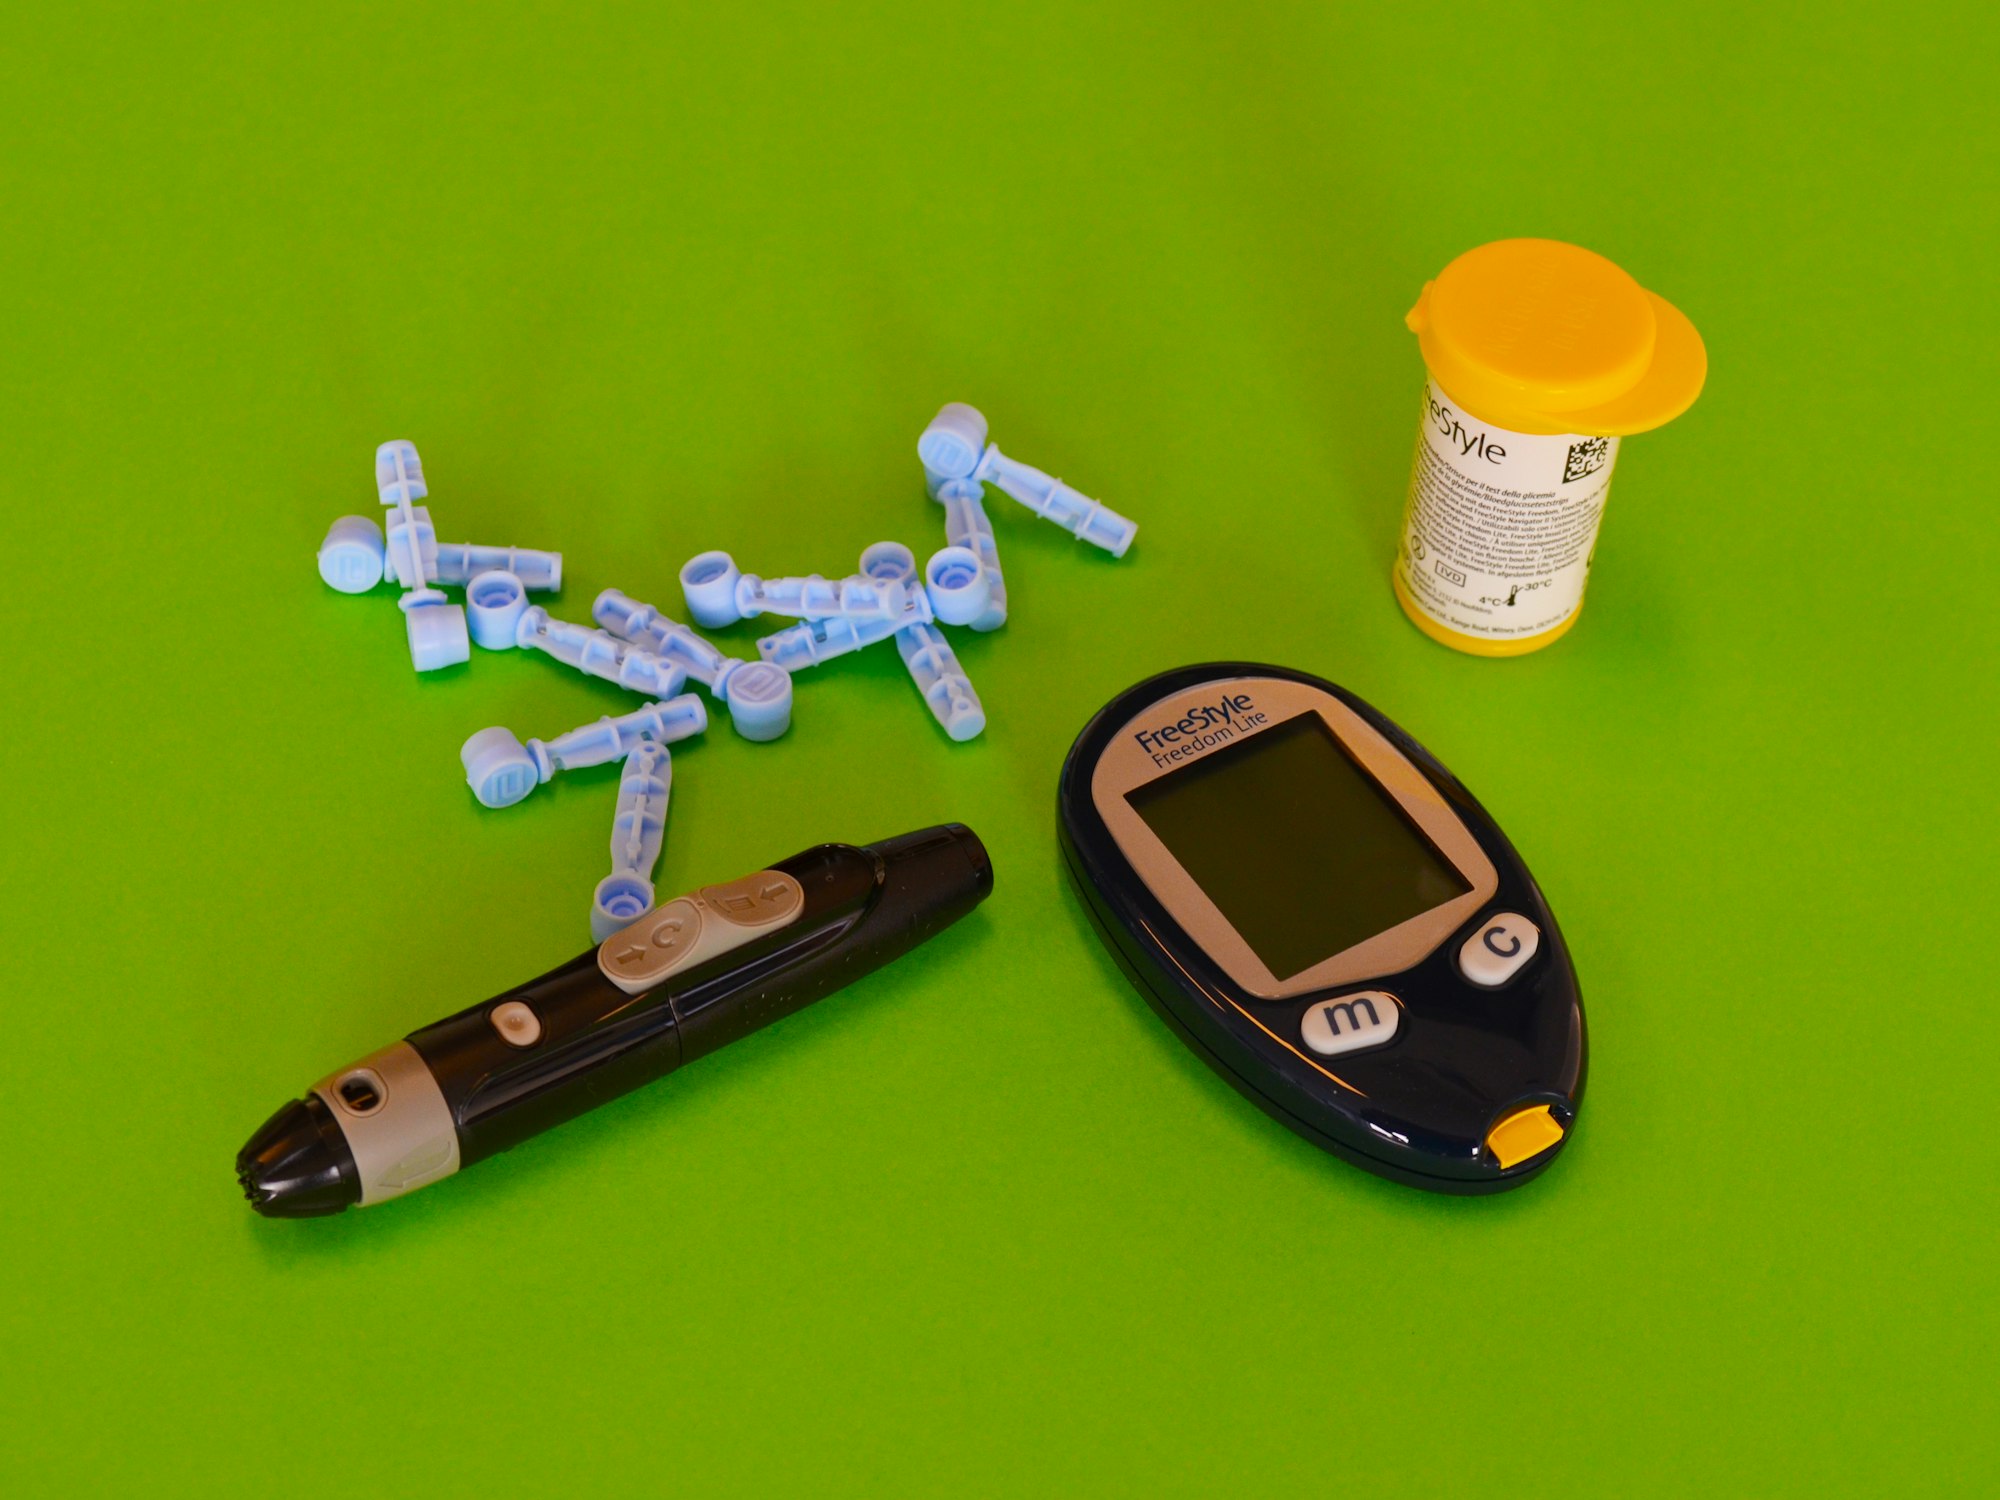 Medication Safety Training: Diabetes and High Blood Sugar